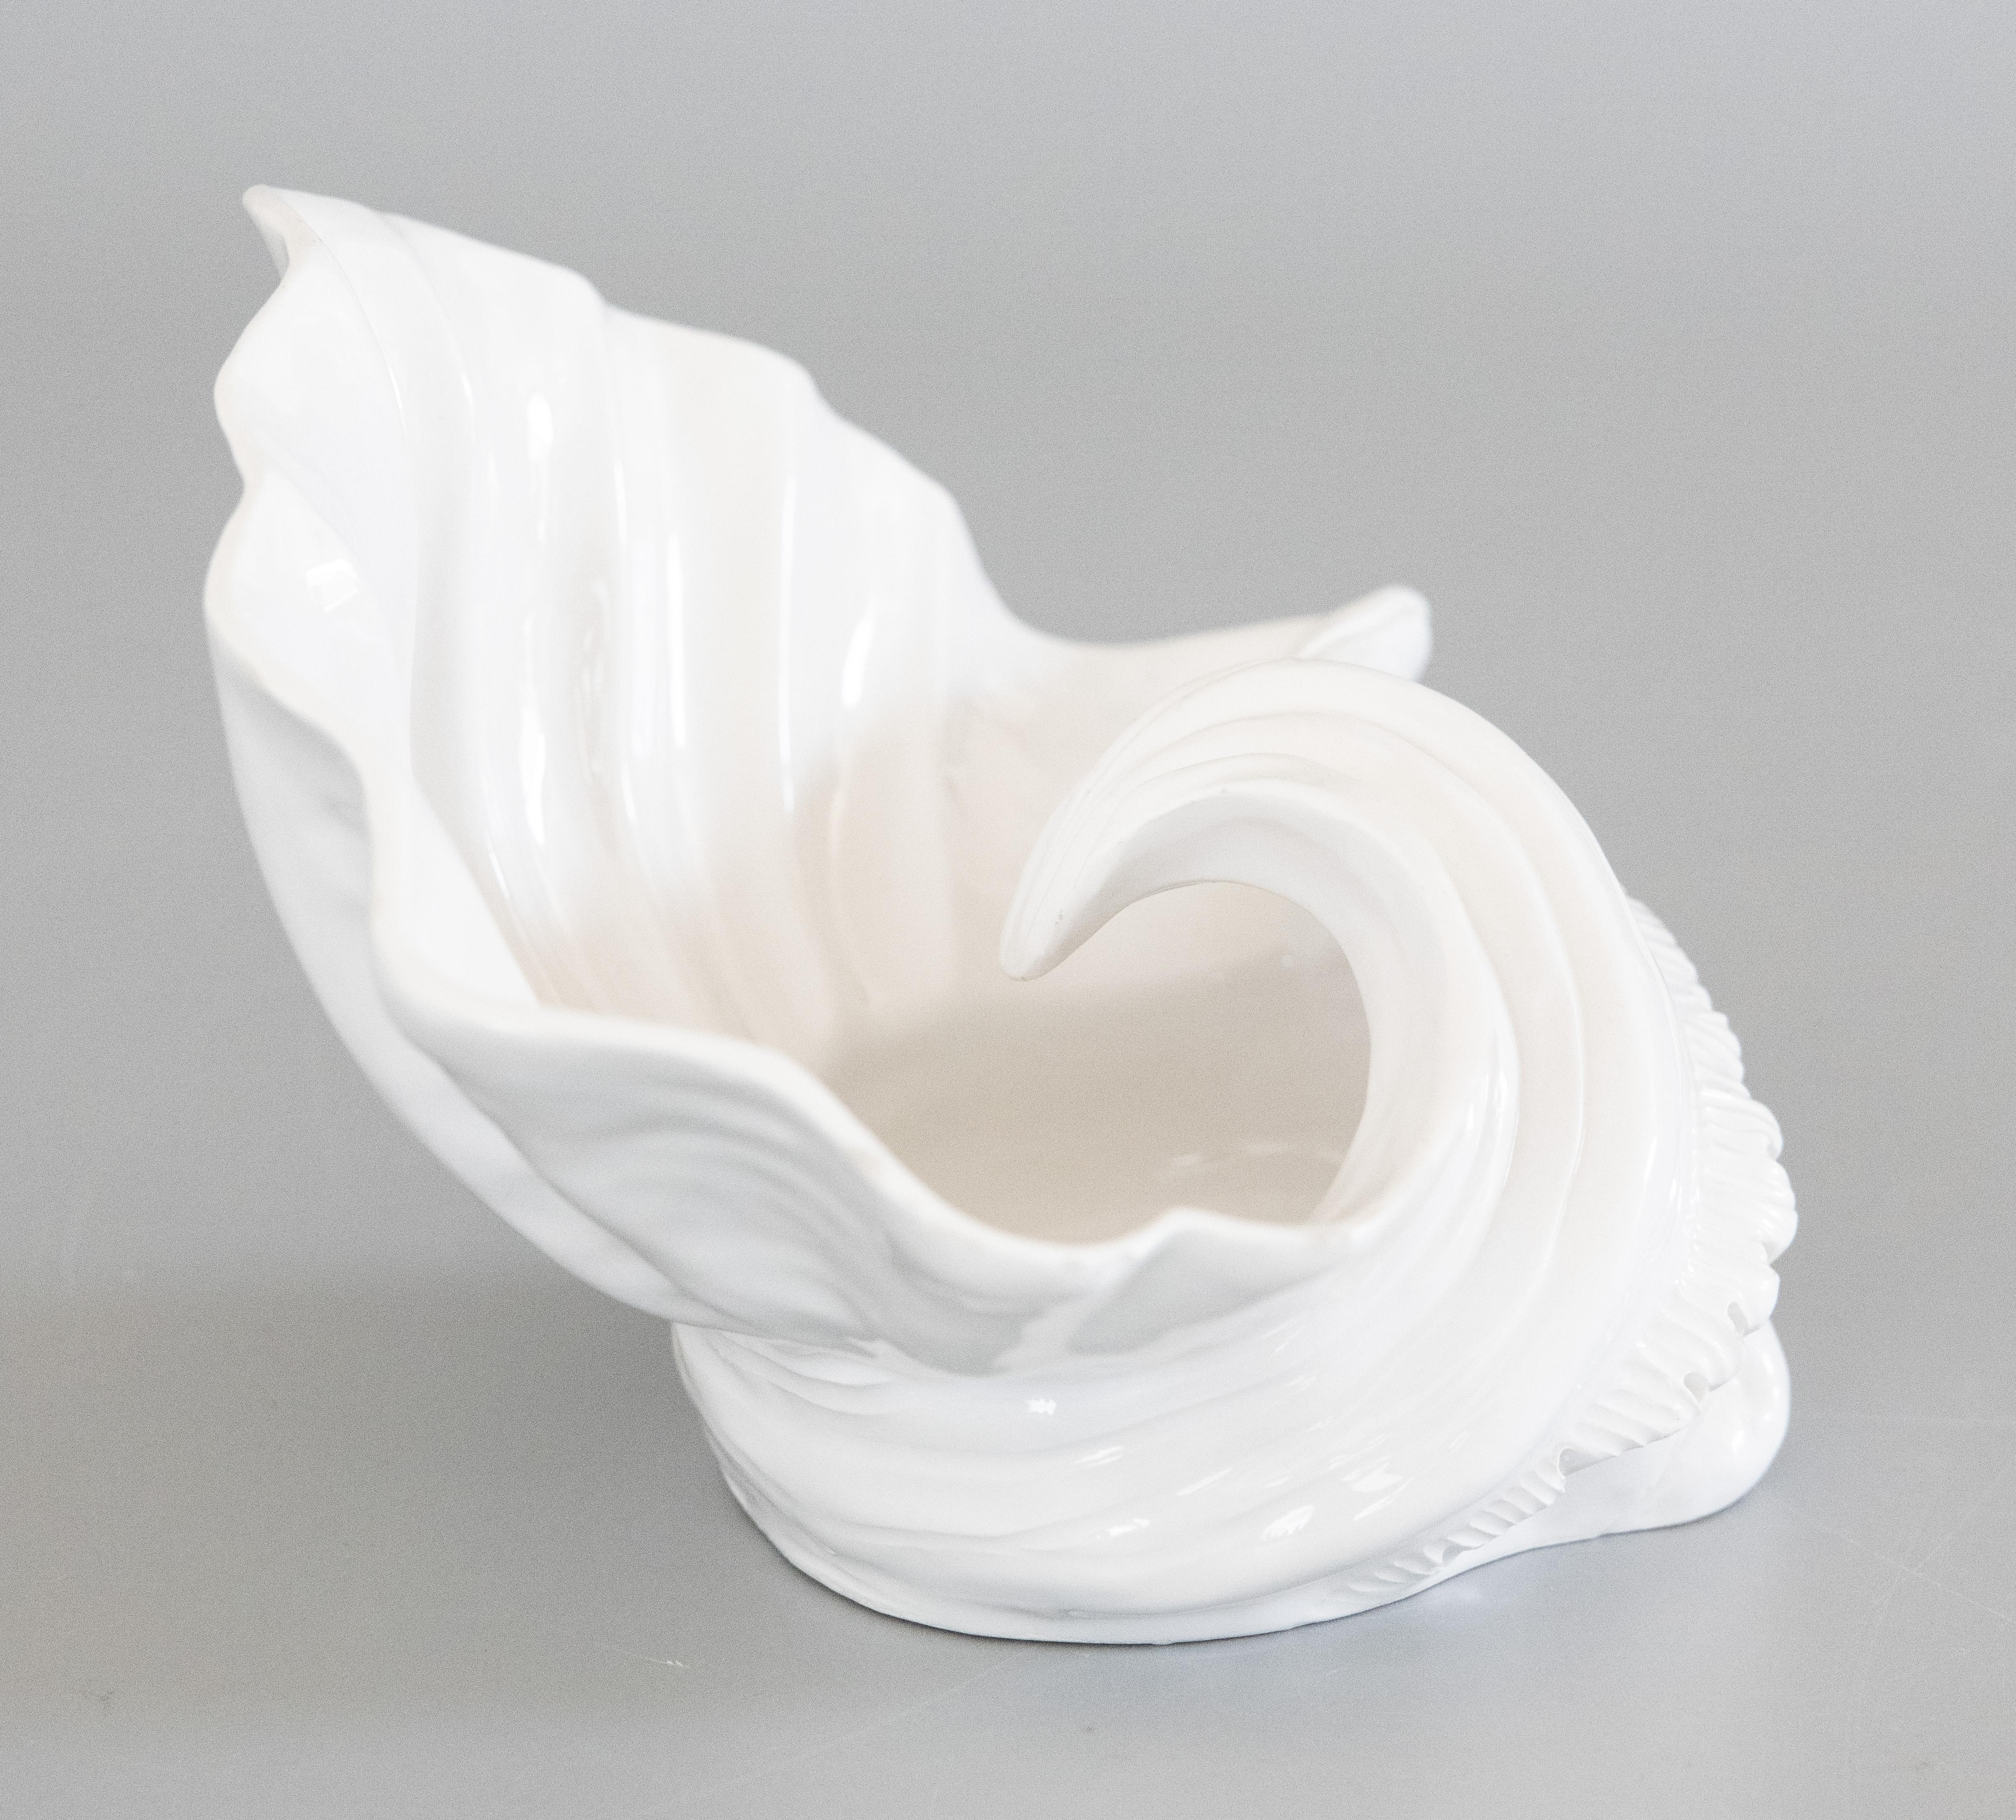 A lovely vintage Italian white ceramic seashell bowl or dish. Marked 